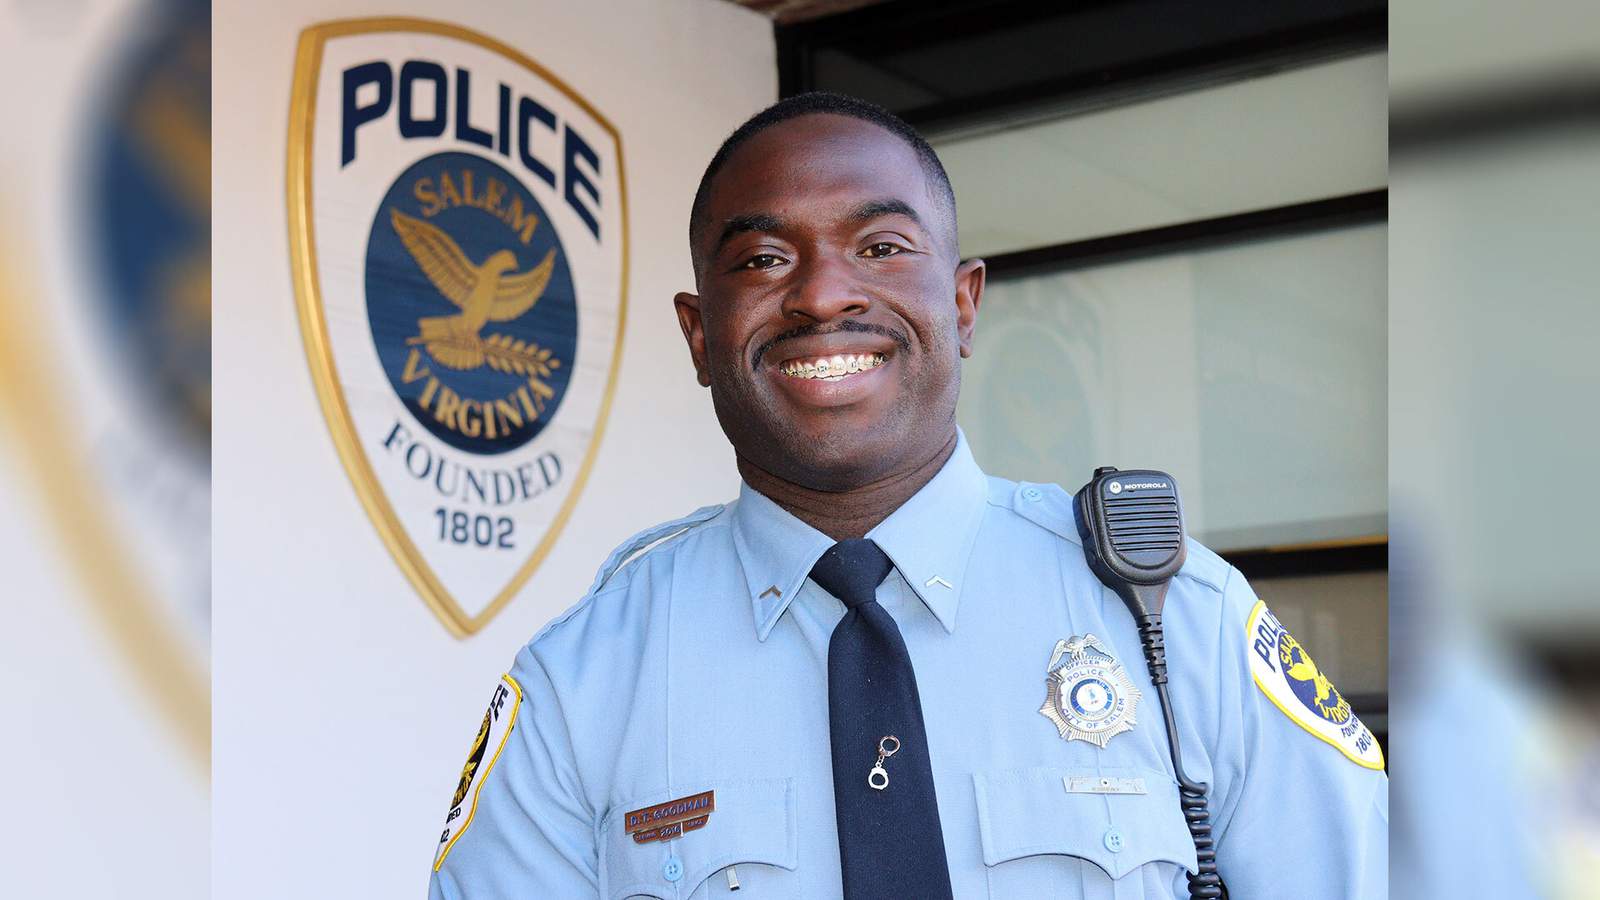 Salem middle school resource officer named police department’s top officer